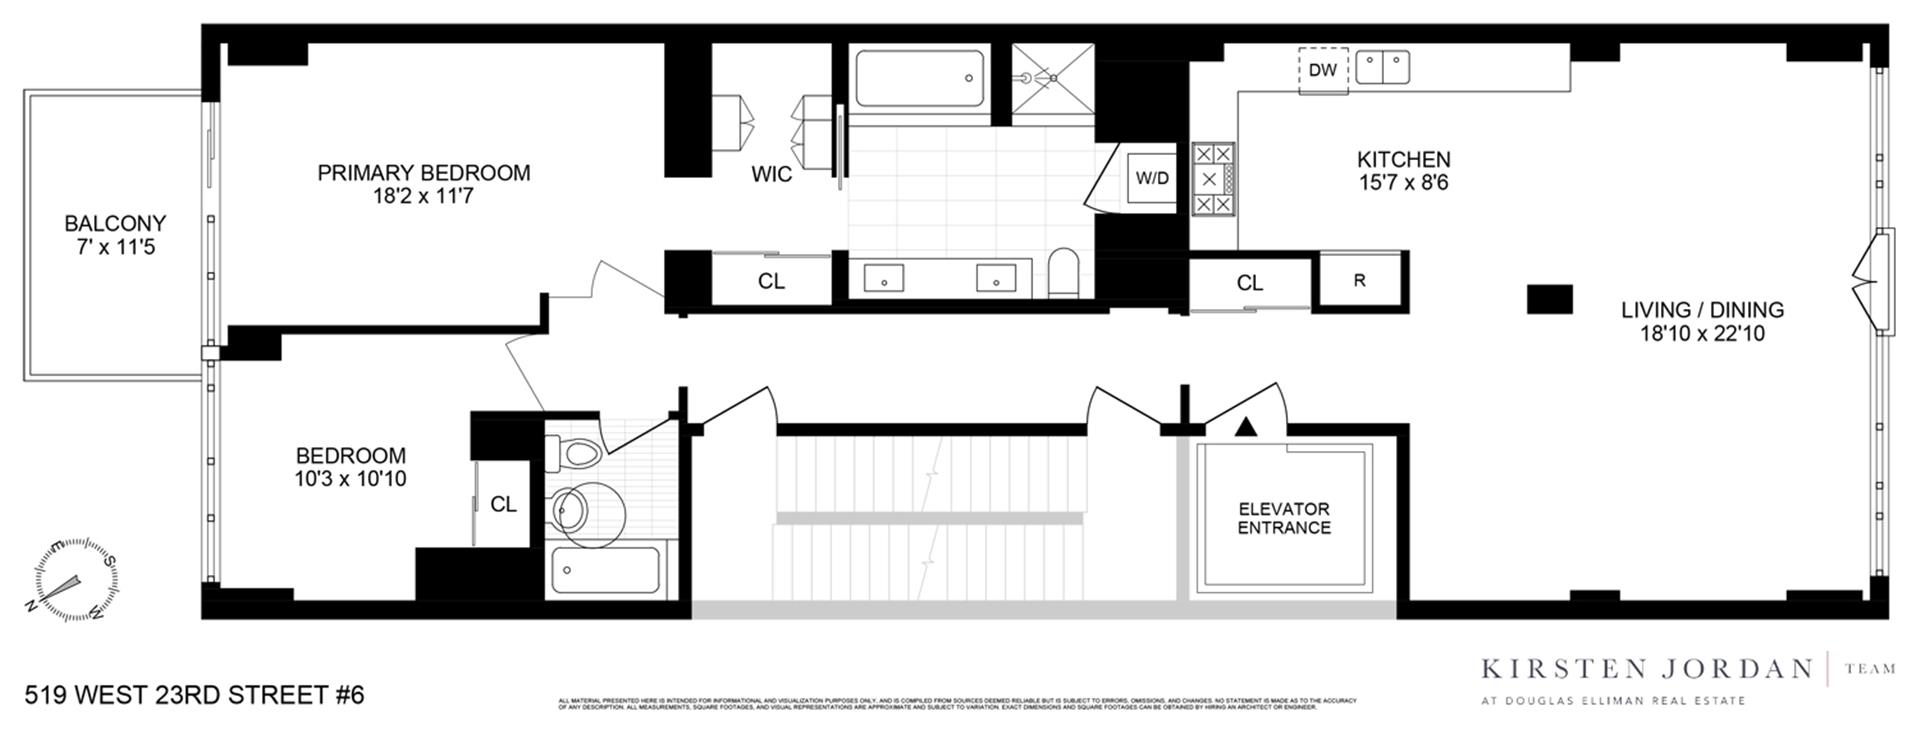 Floorplan for 519 West 23rd Street, 6